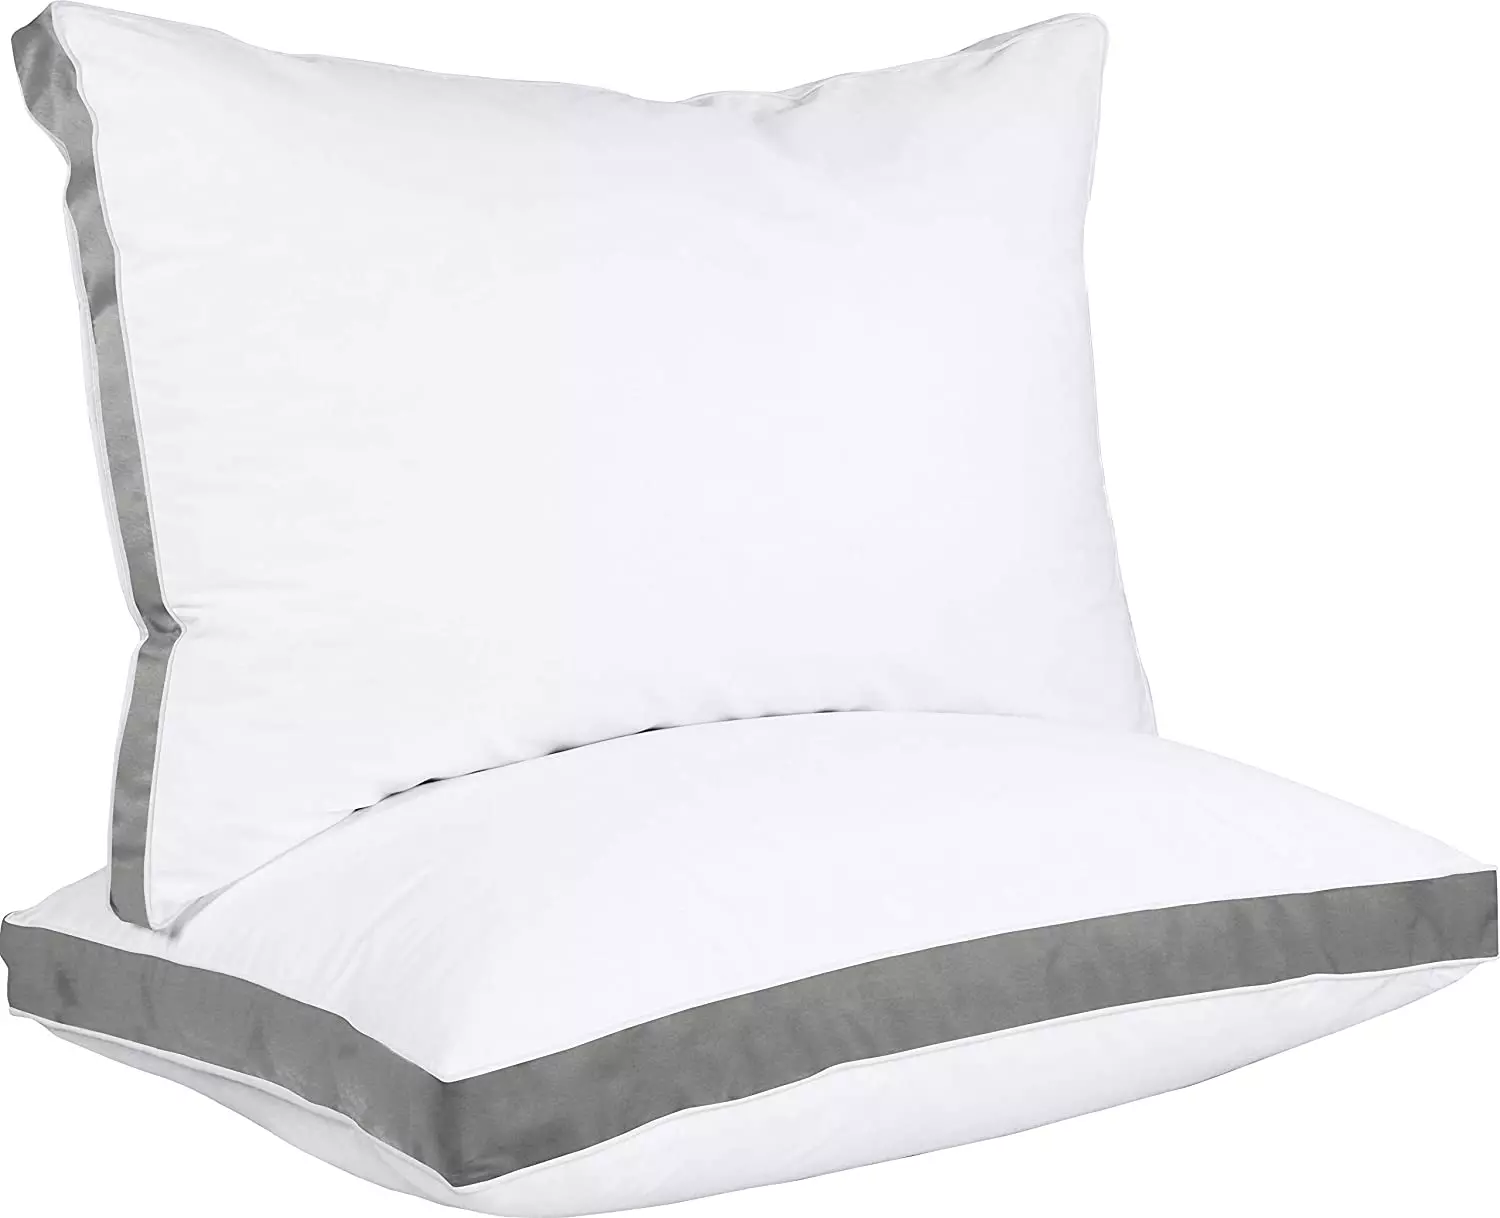 Utopia Bedding Premium Gusseted Pillow